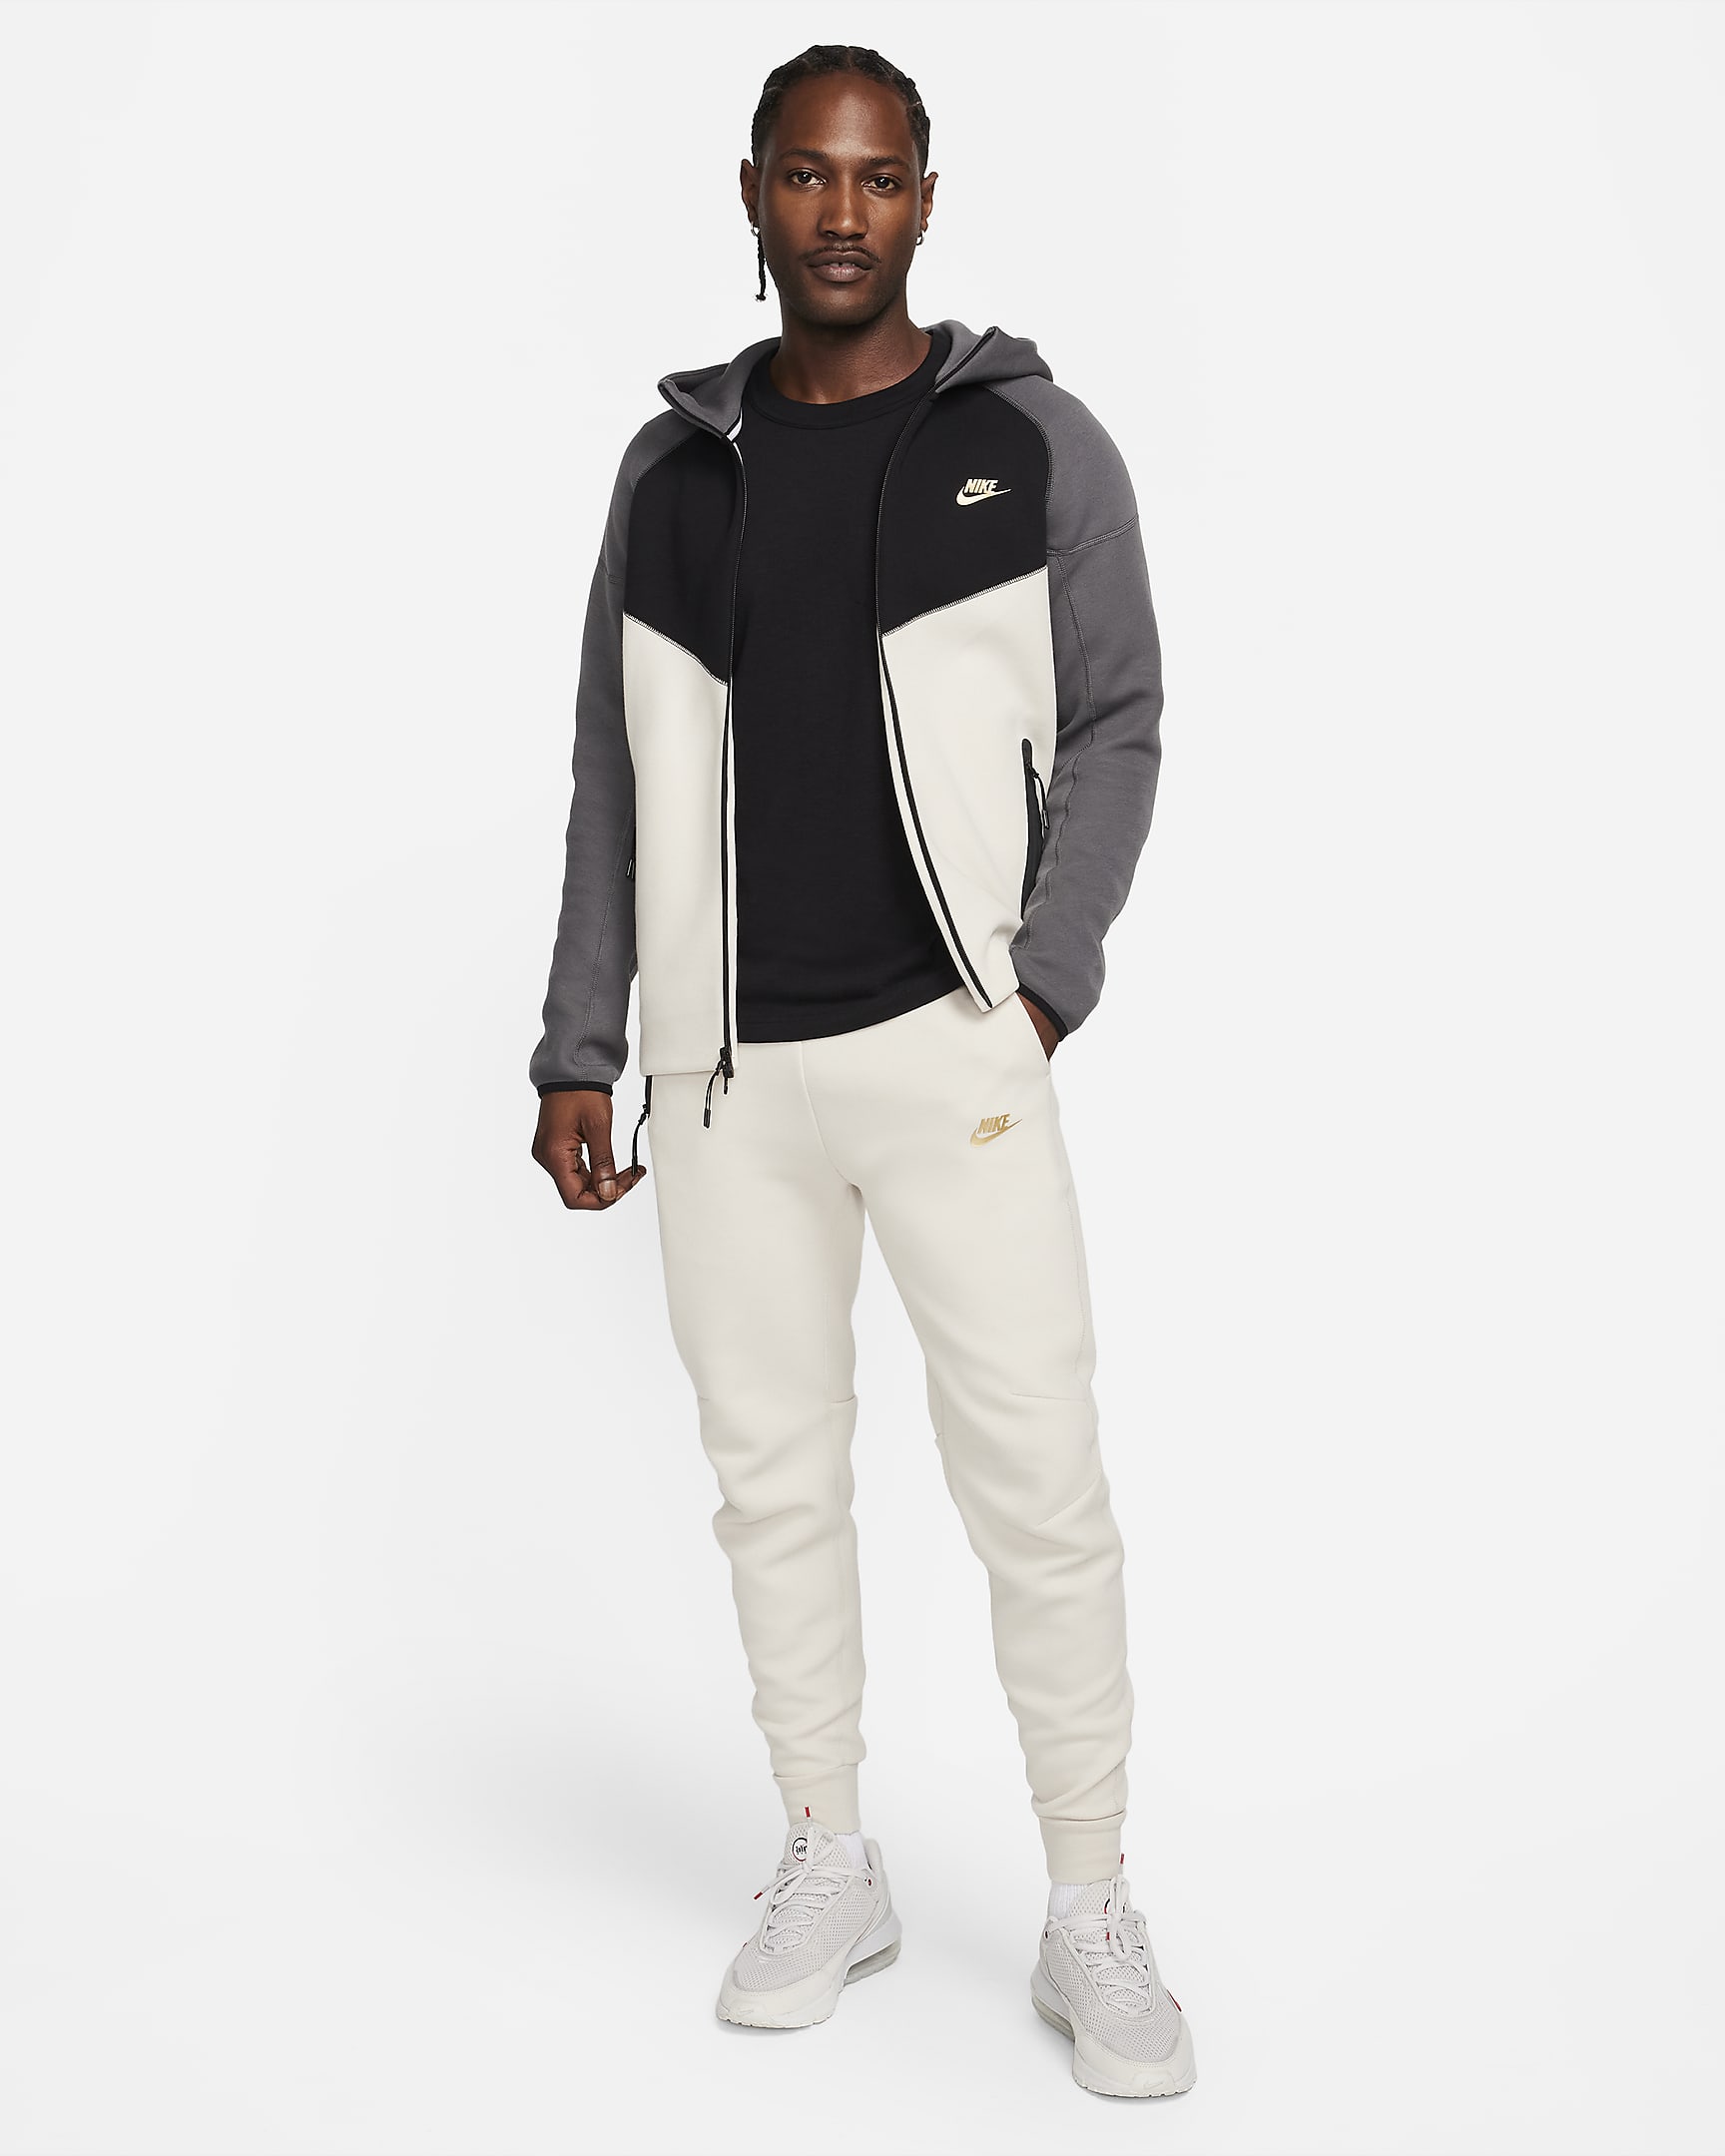 Nike Sportswear Tech Fleece Herren-Jogger - Light Orewood Brown/Metallic Gold